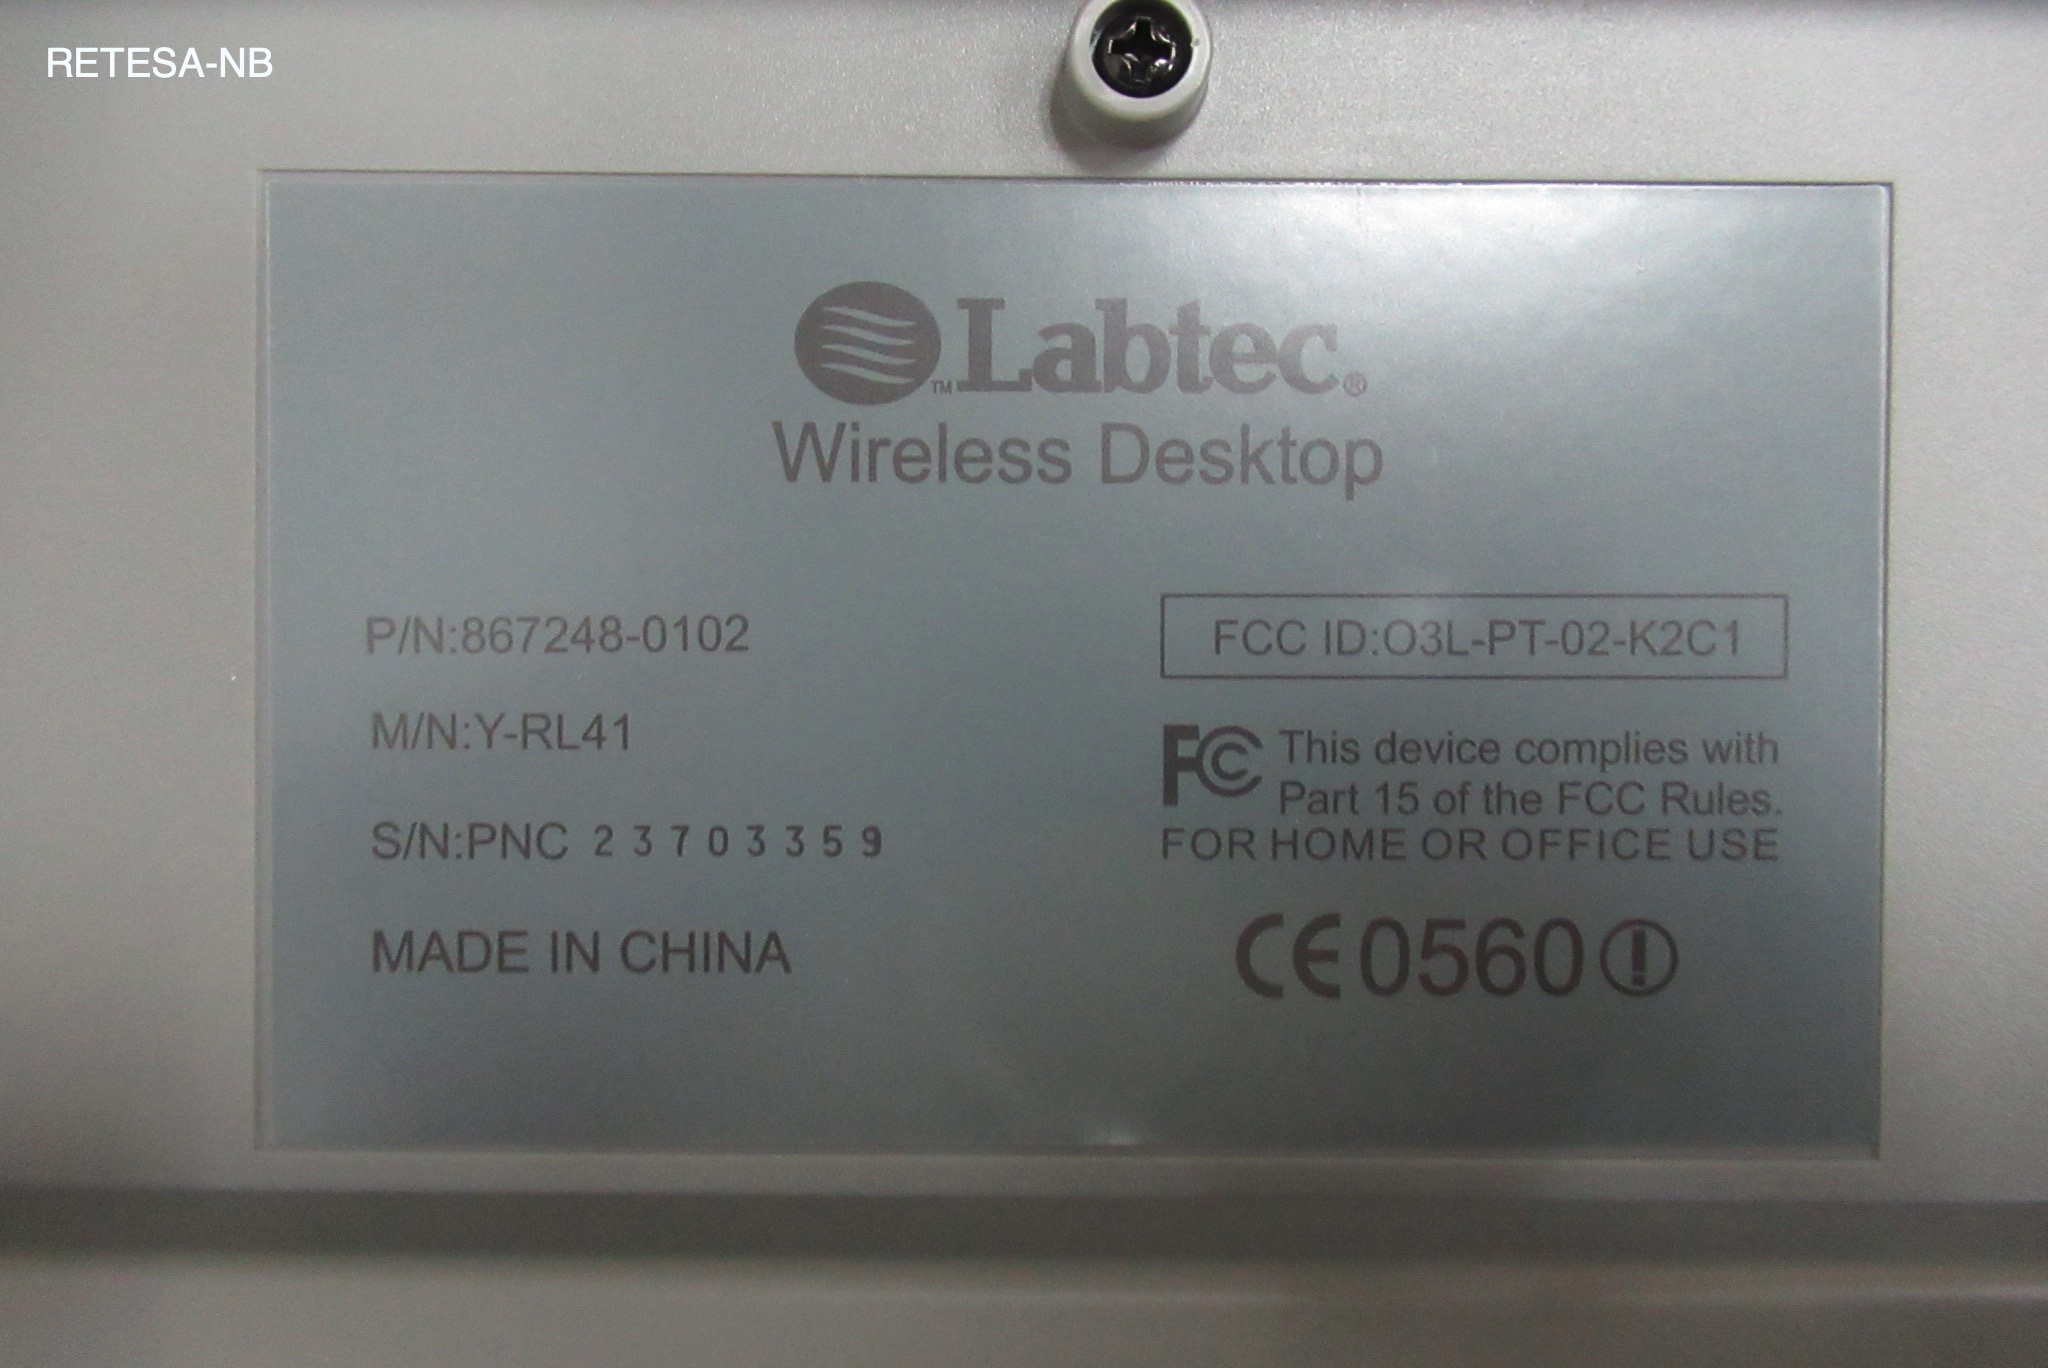 Wireless Desktop dt. PS/2 LABTEC 967263-0102